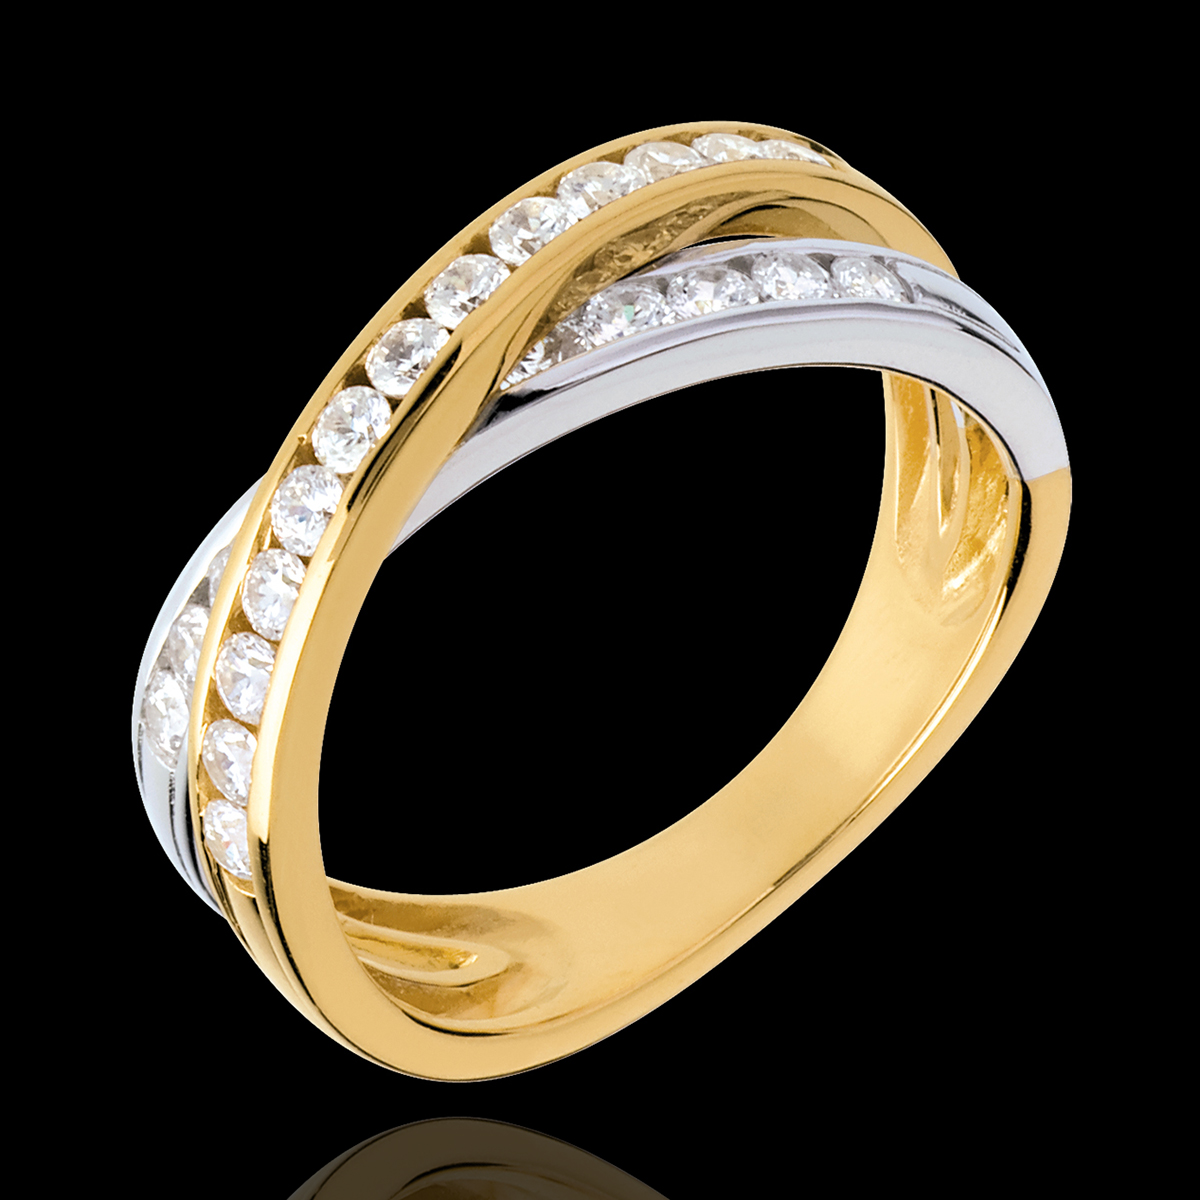 Tandem ring paved - 0.6 carat - 23 diamonds : Edenly jewelery